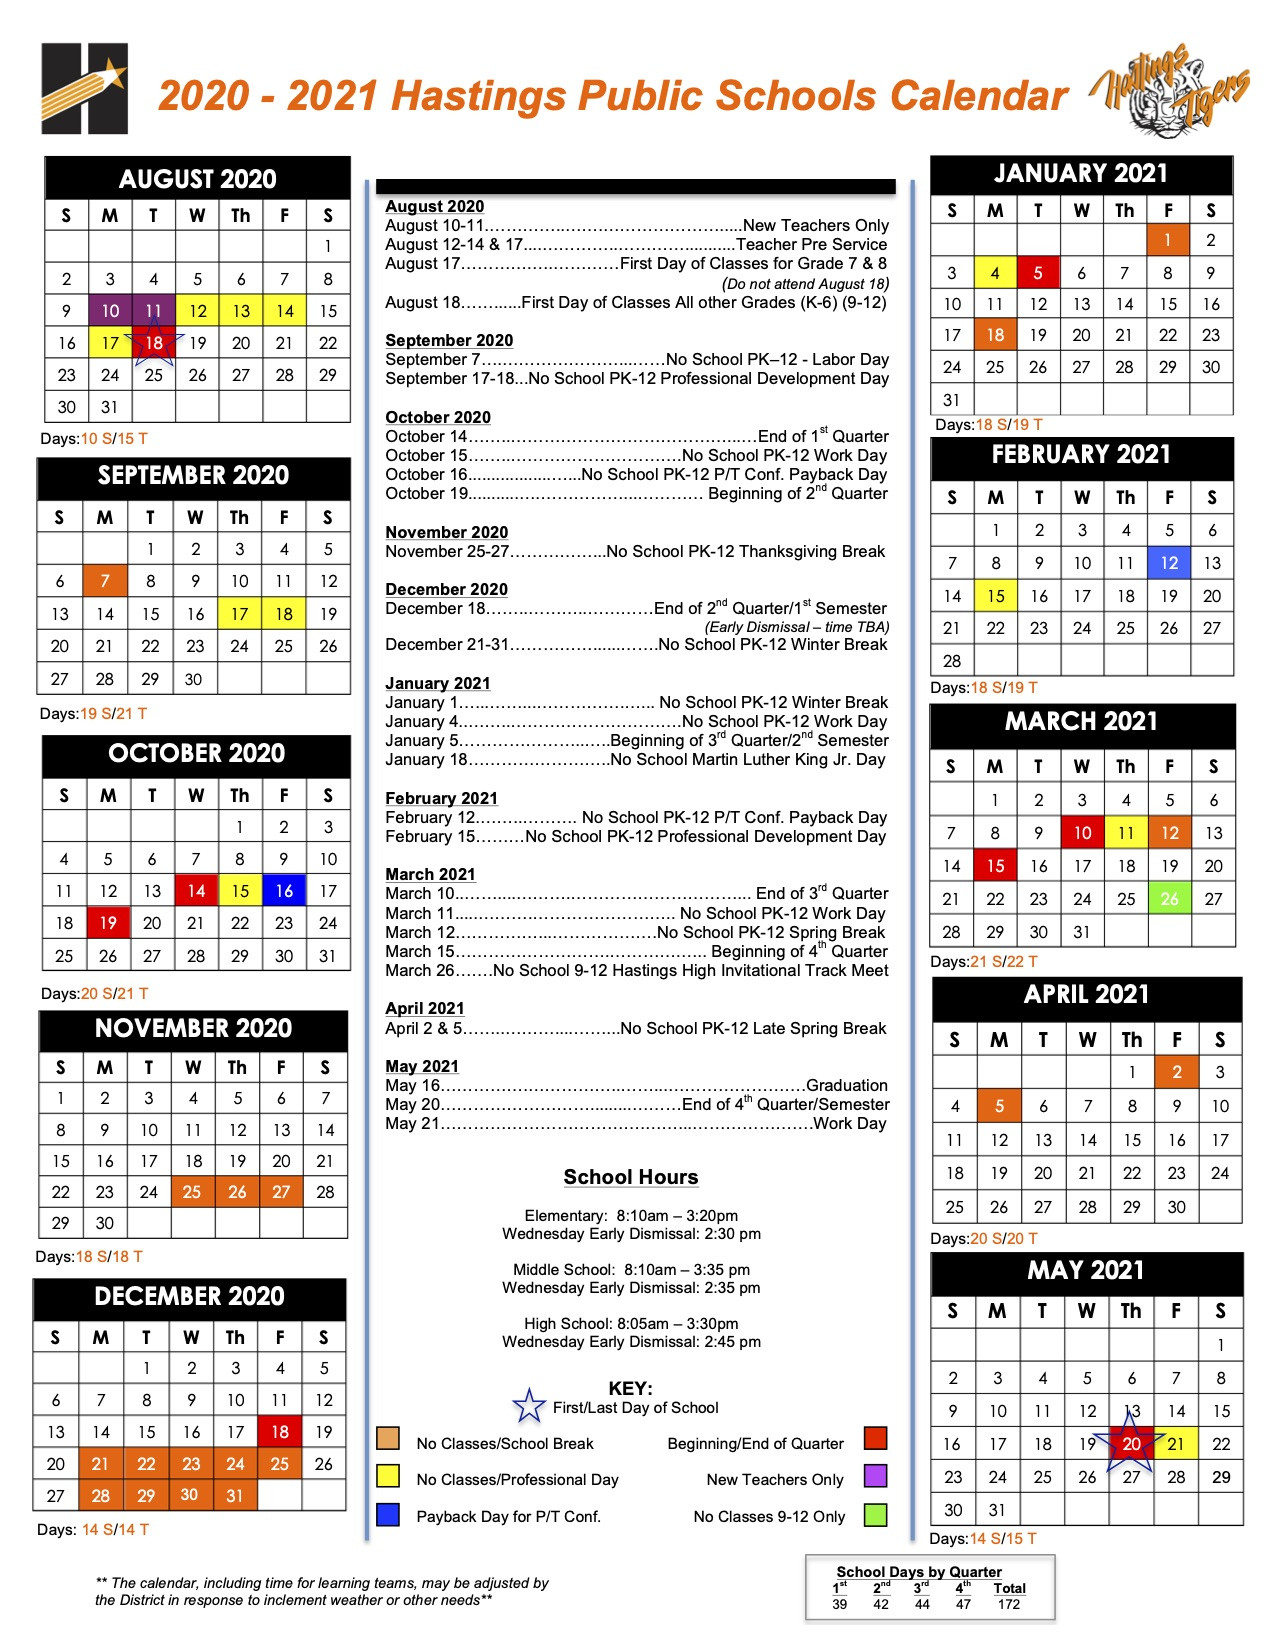 Days Of Attendance Calendar - Hastings Public Schools-2021 Attendance Calendar